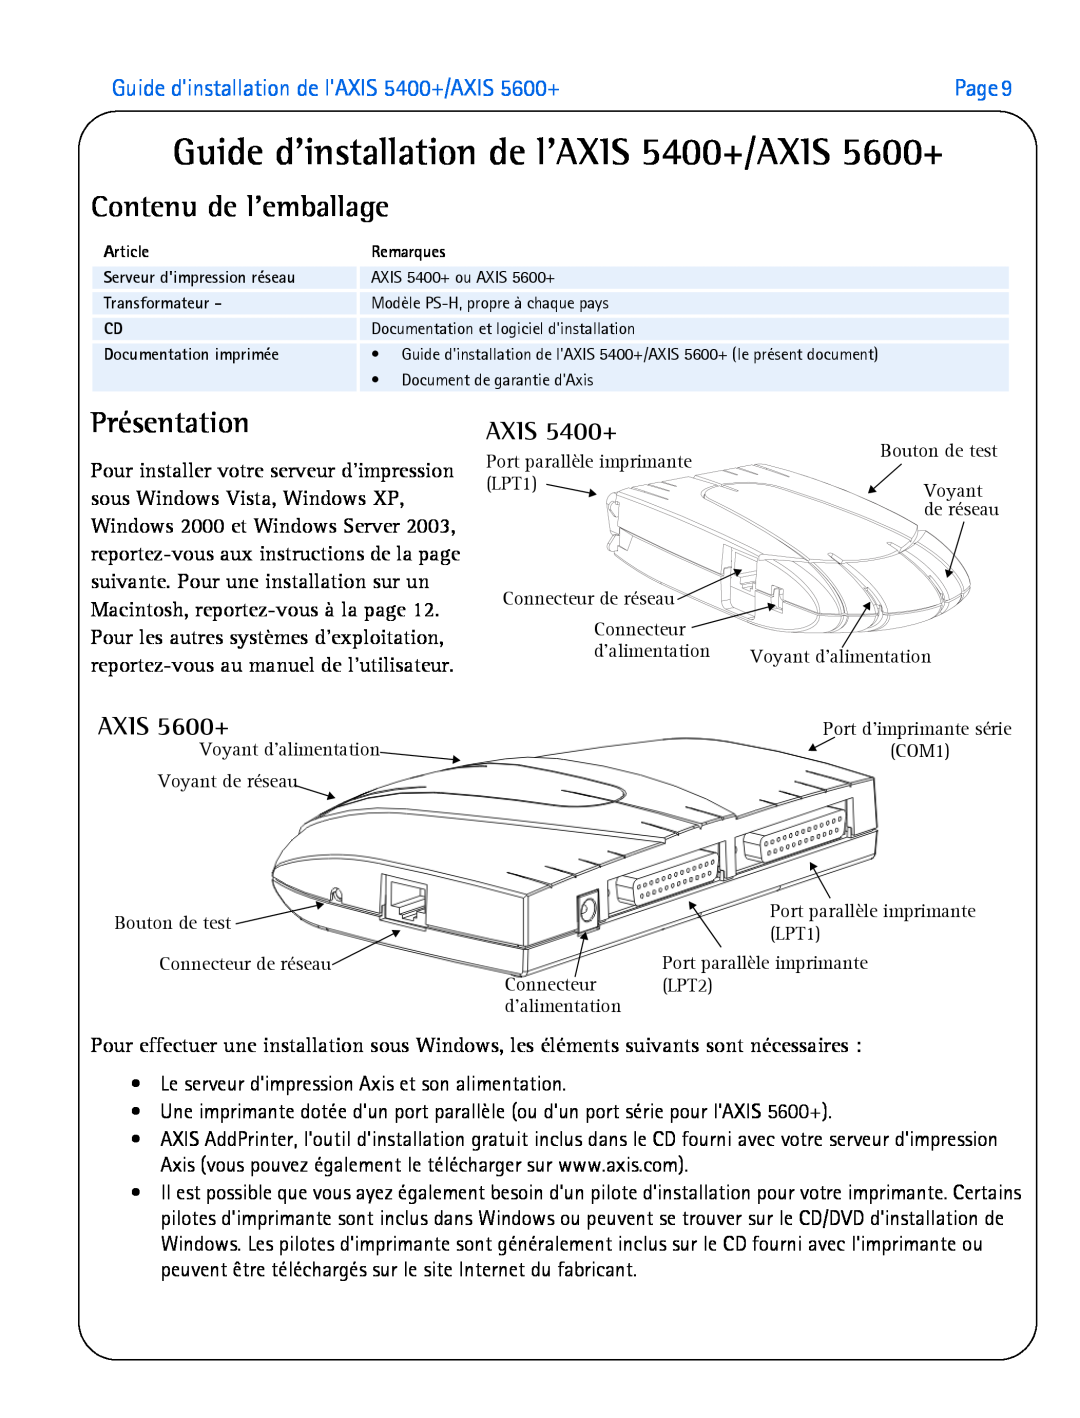 Axis Communications manual Guide dinstallation de lAXIS 5400+/AXIS 5600+, Contenu de lemballage, Présentation 